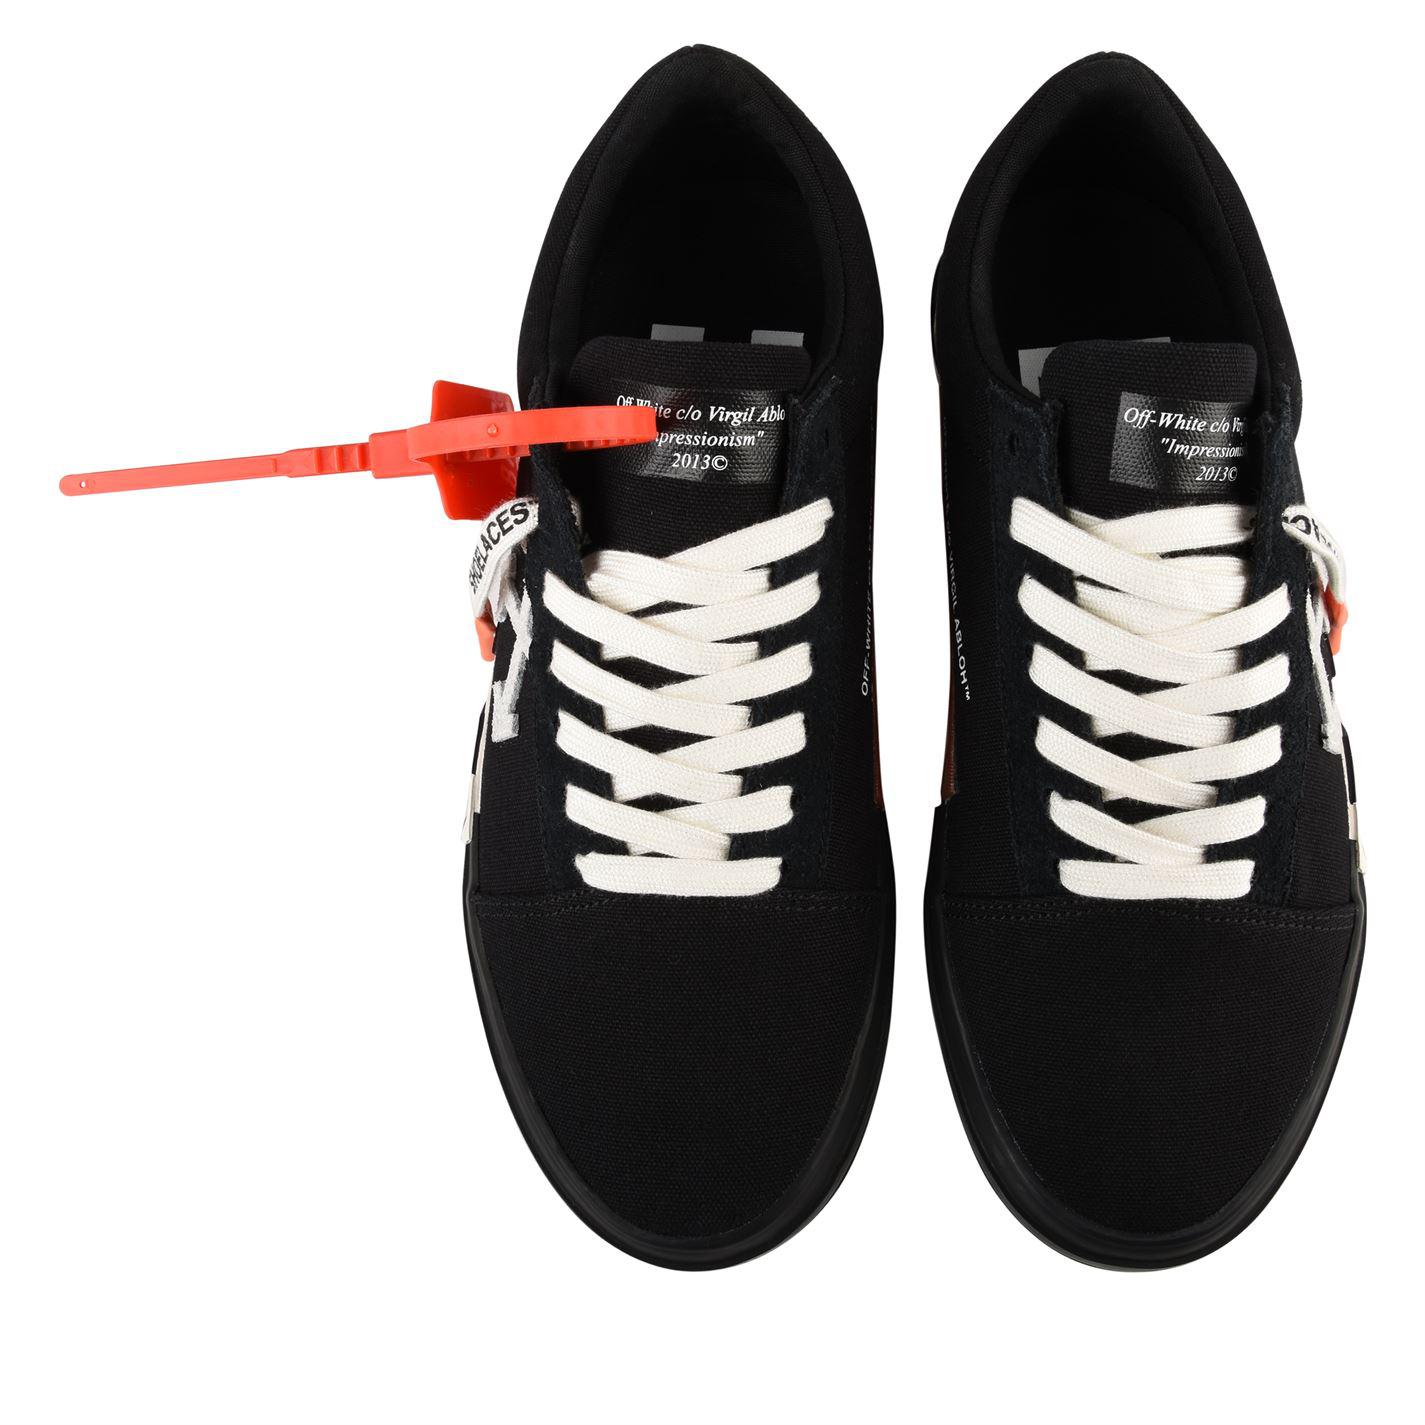 Off-White c/o Virgil Abloh Vulcanized Striped Low Top Sneaker in Black